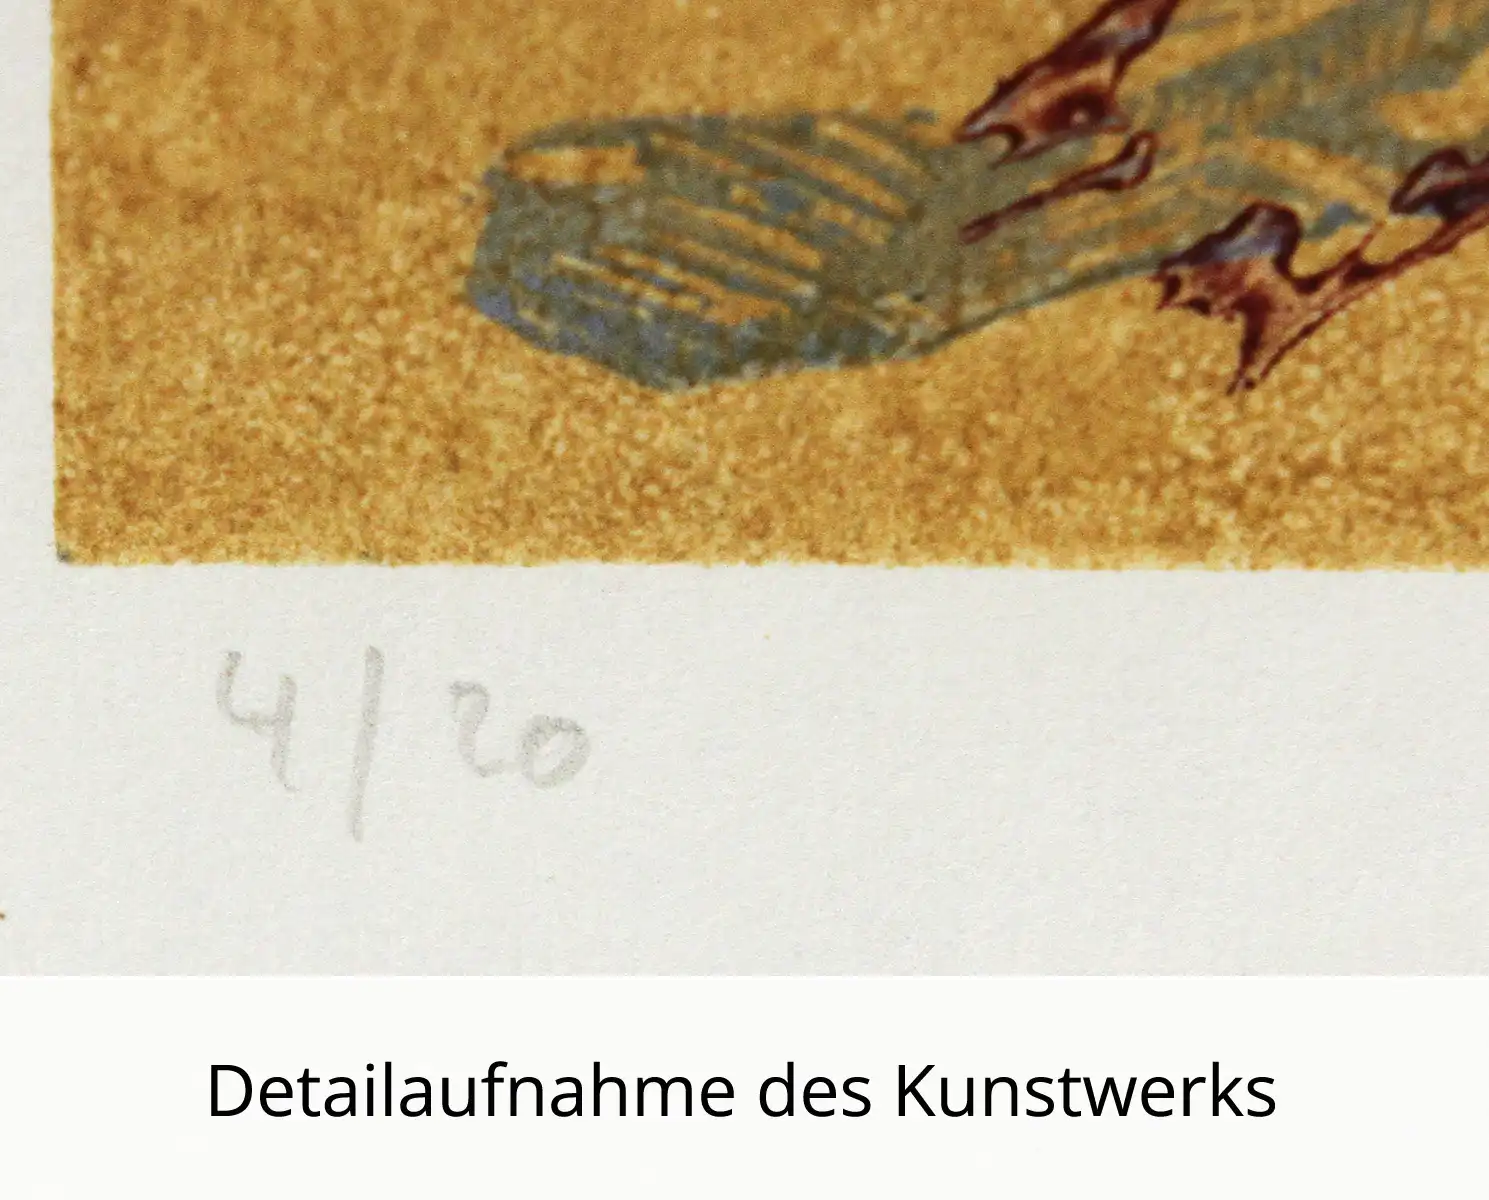 F.O. Haake: "Zwei Bäume, Nr. 4/20", originale Grafik/serielles Unikat, mehrfarbiger Linoldruck